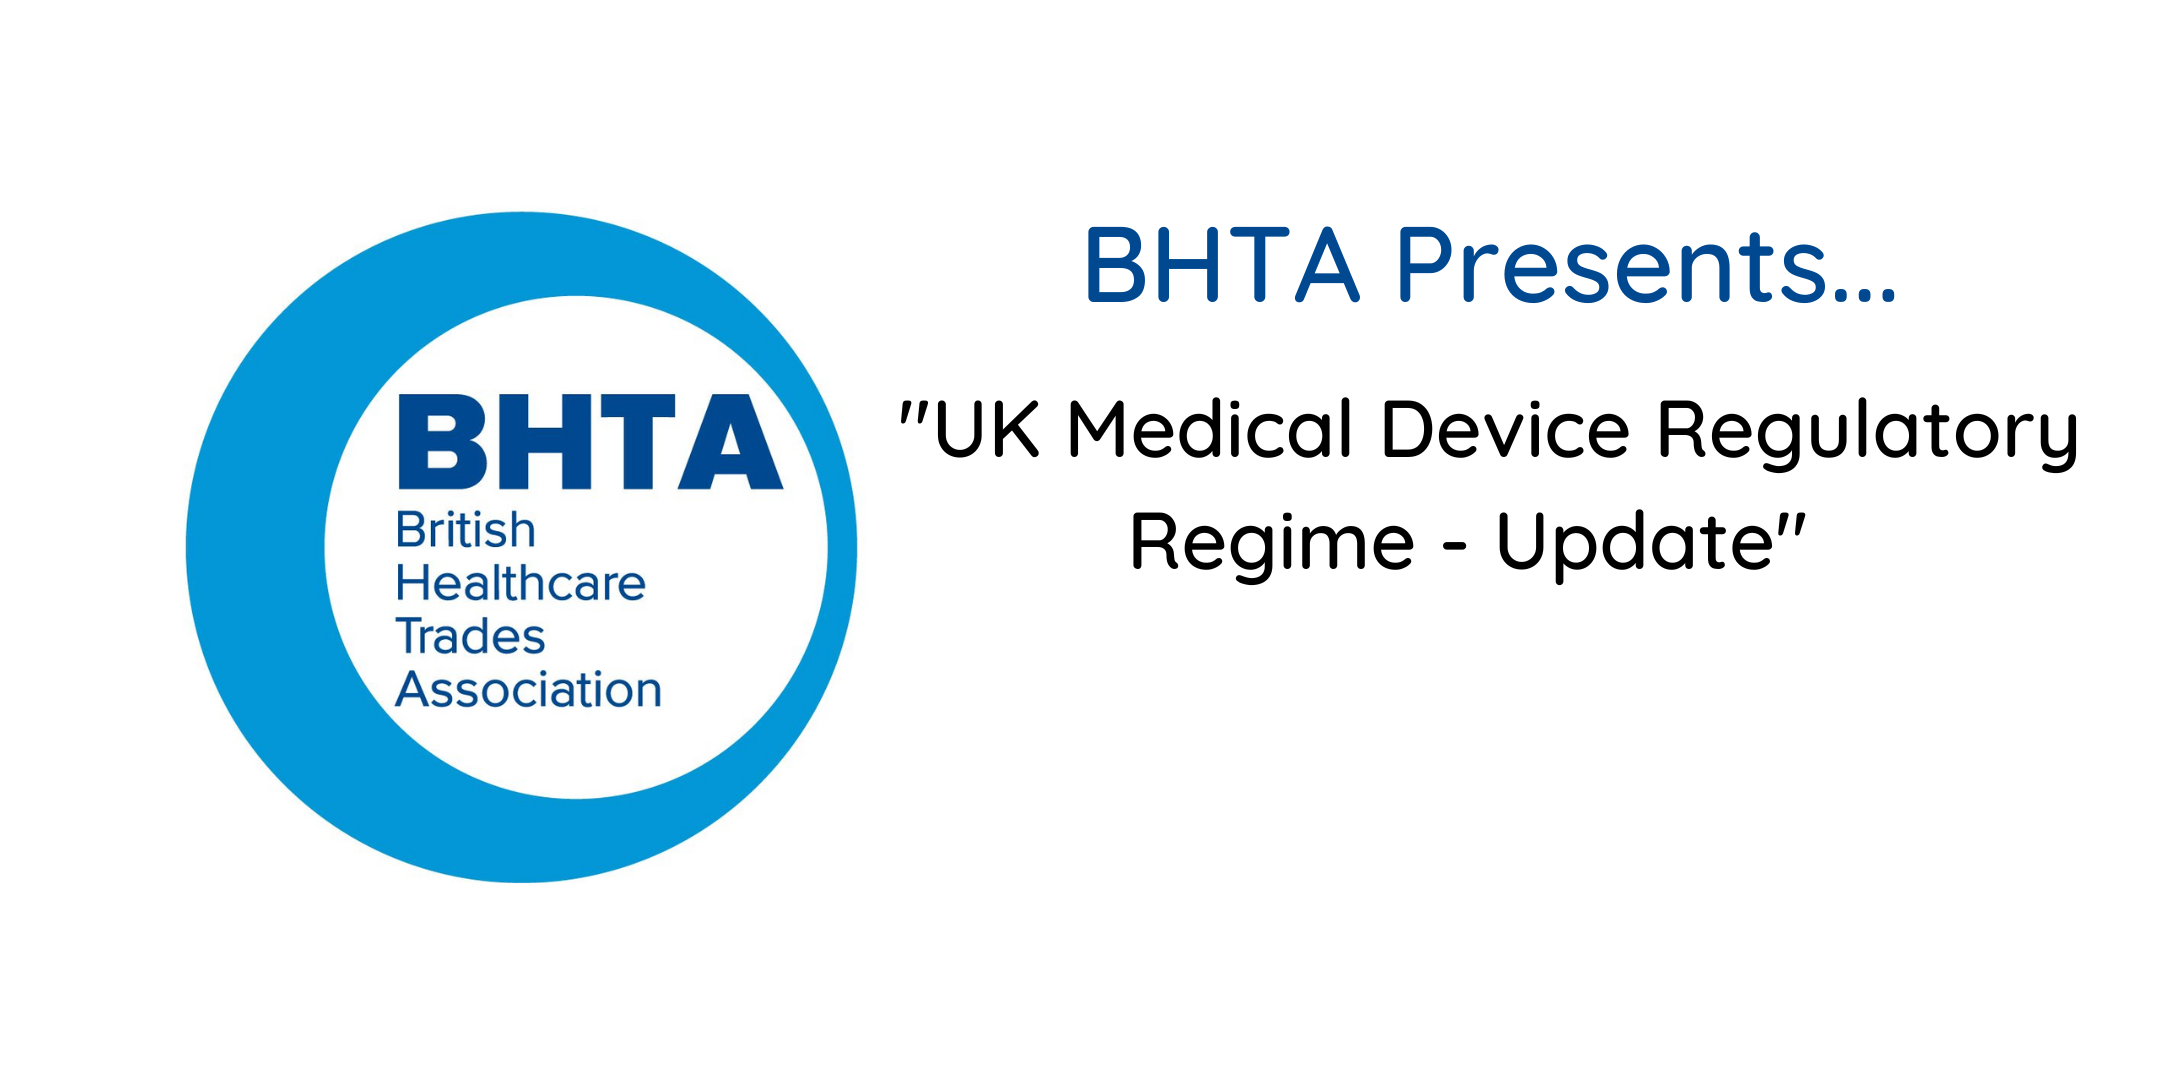 BHTA presents… UK Medical Device Regulatory Regime – Update